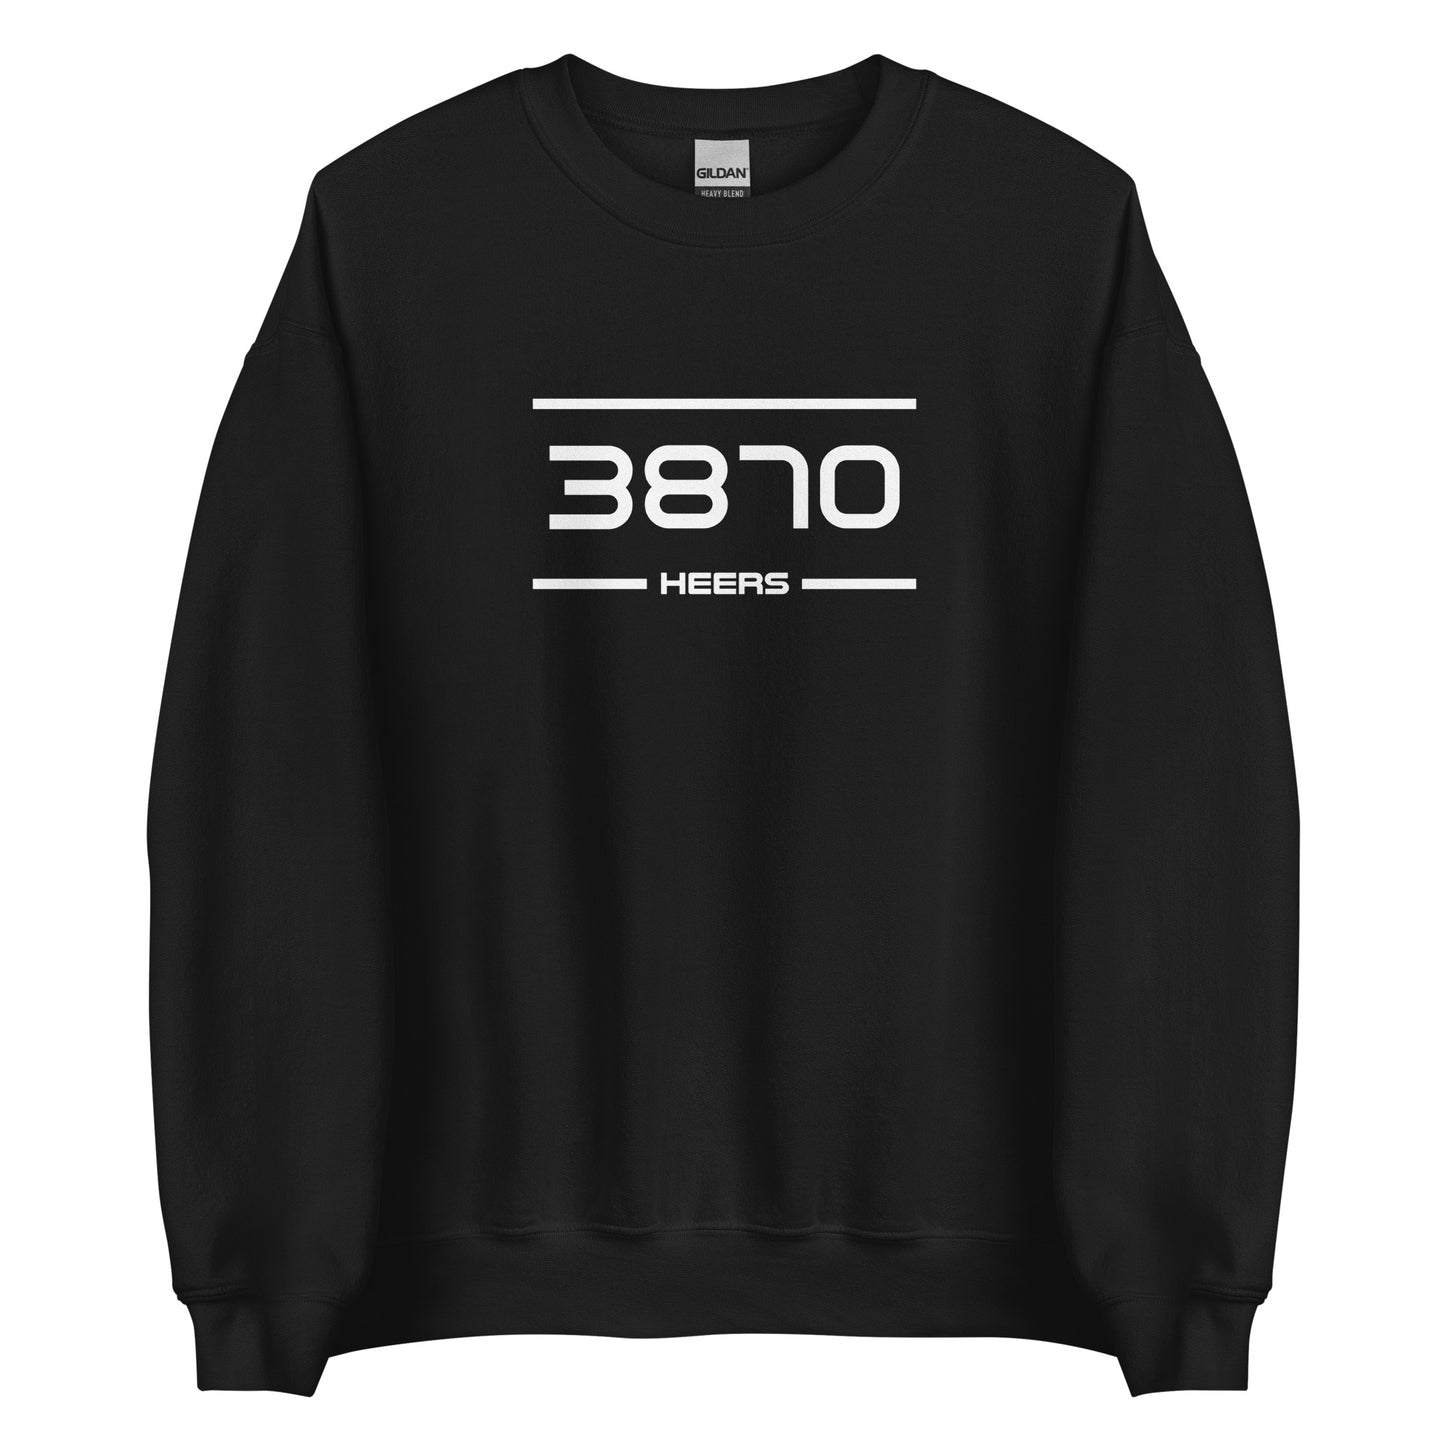 Sweater - 3870 - Heers (M/V)